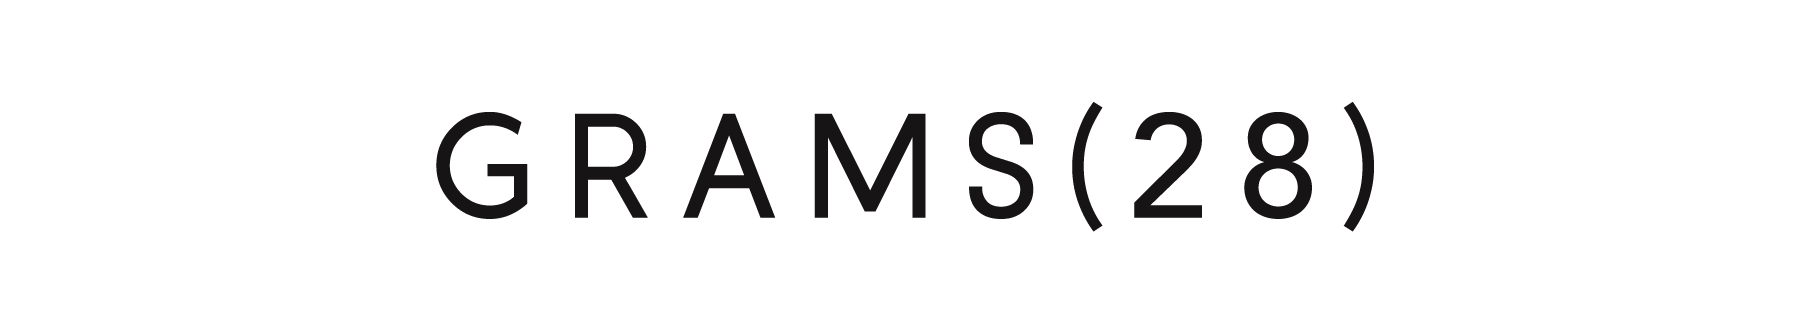 GRAMS28 coupons logo